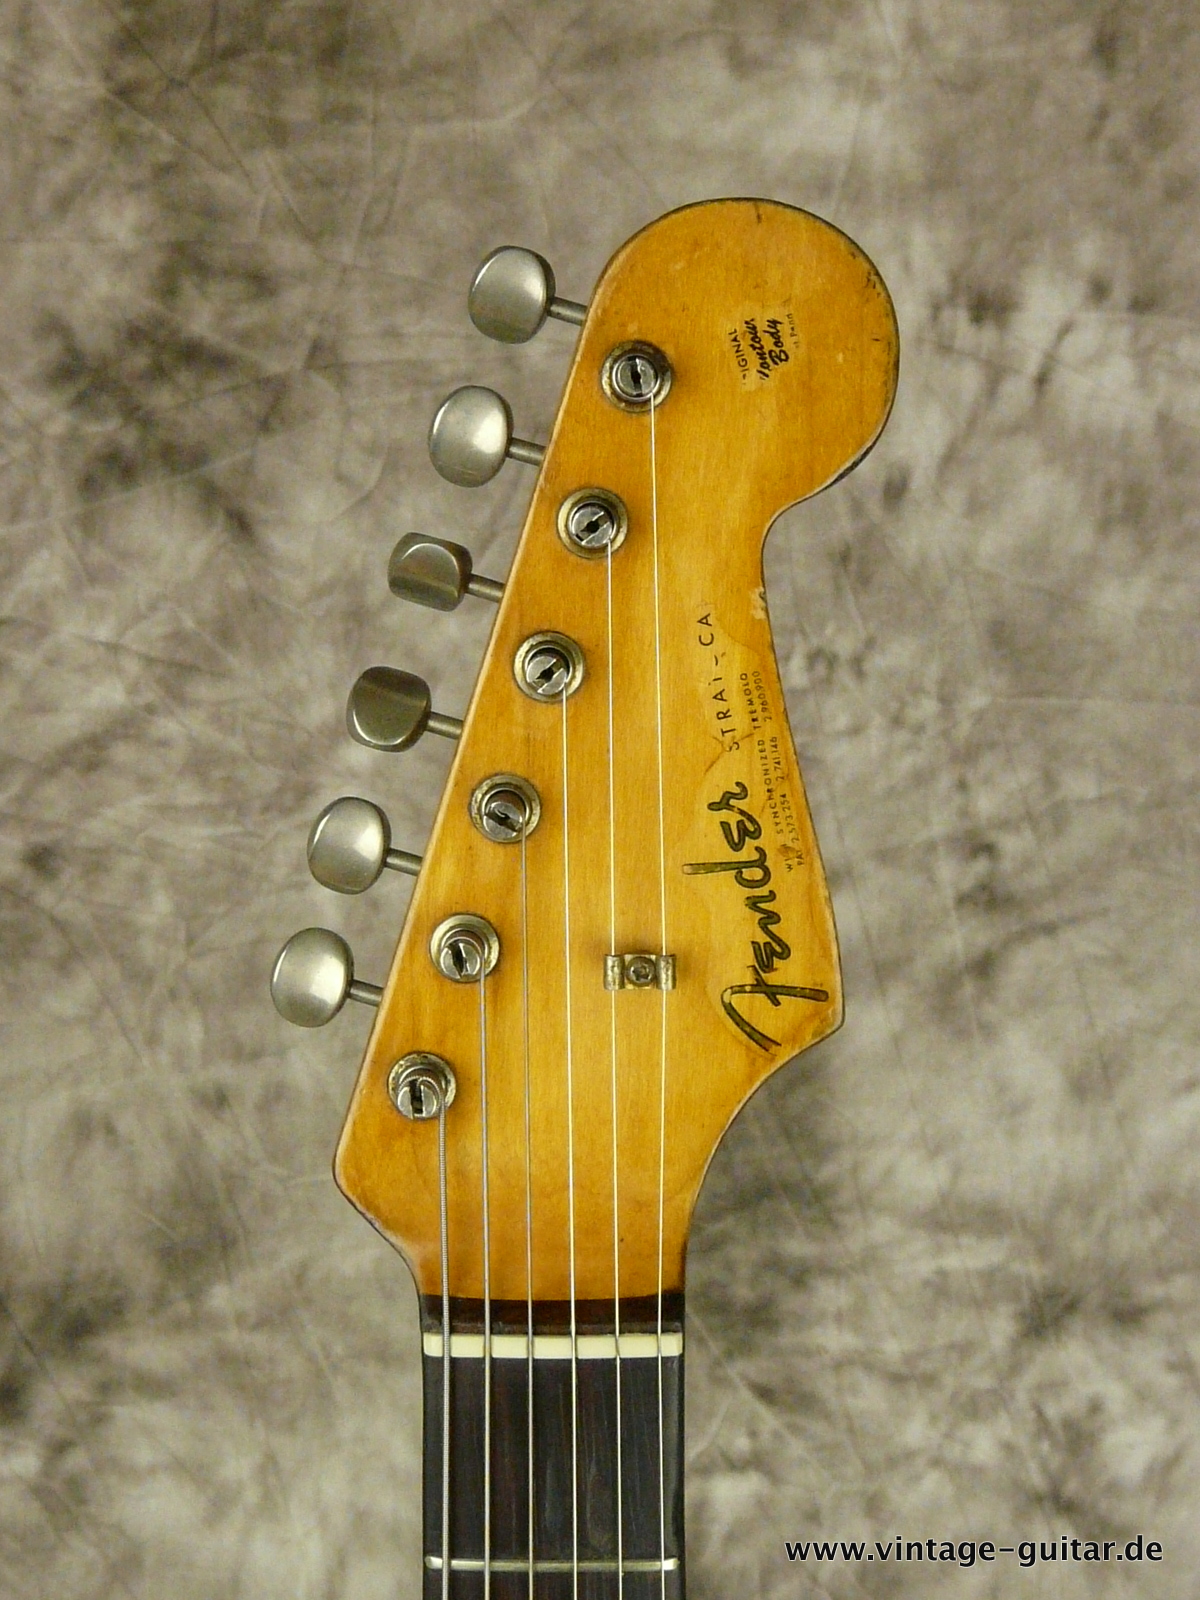 Fender_Stratocaster_candy-apple-red-1964-010.JPG